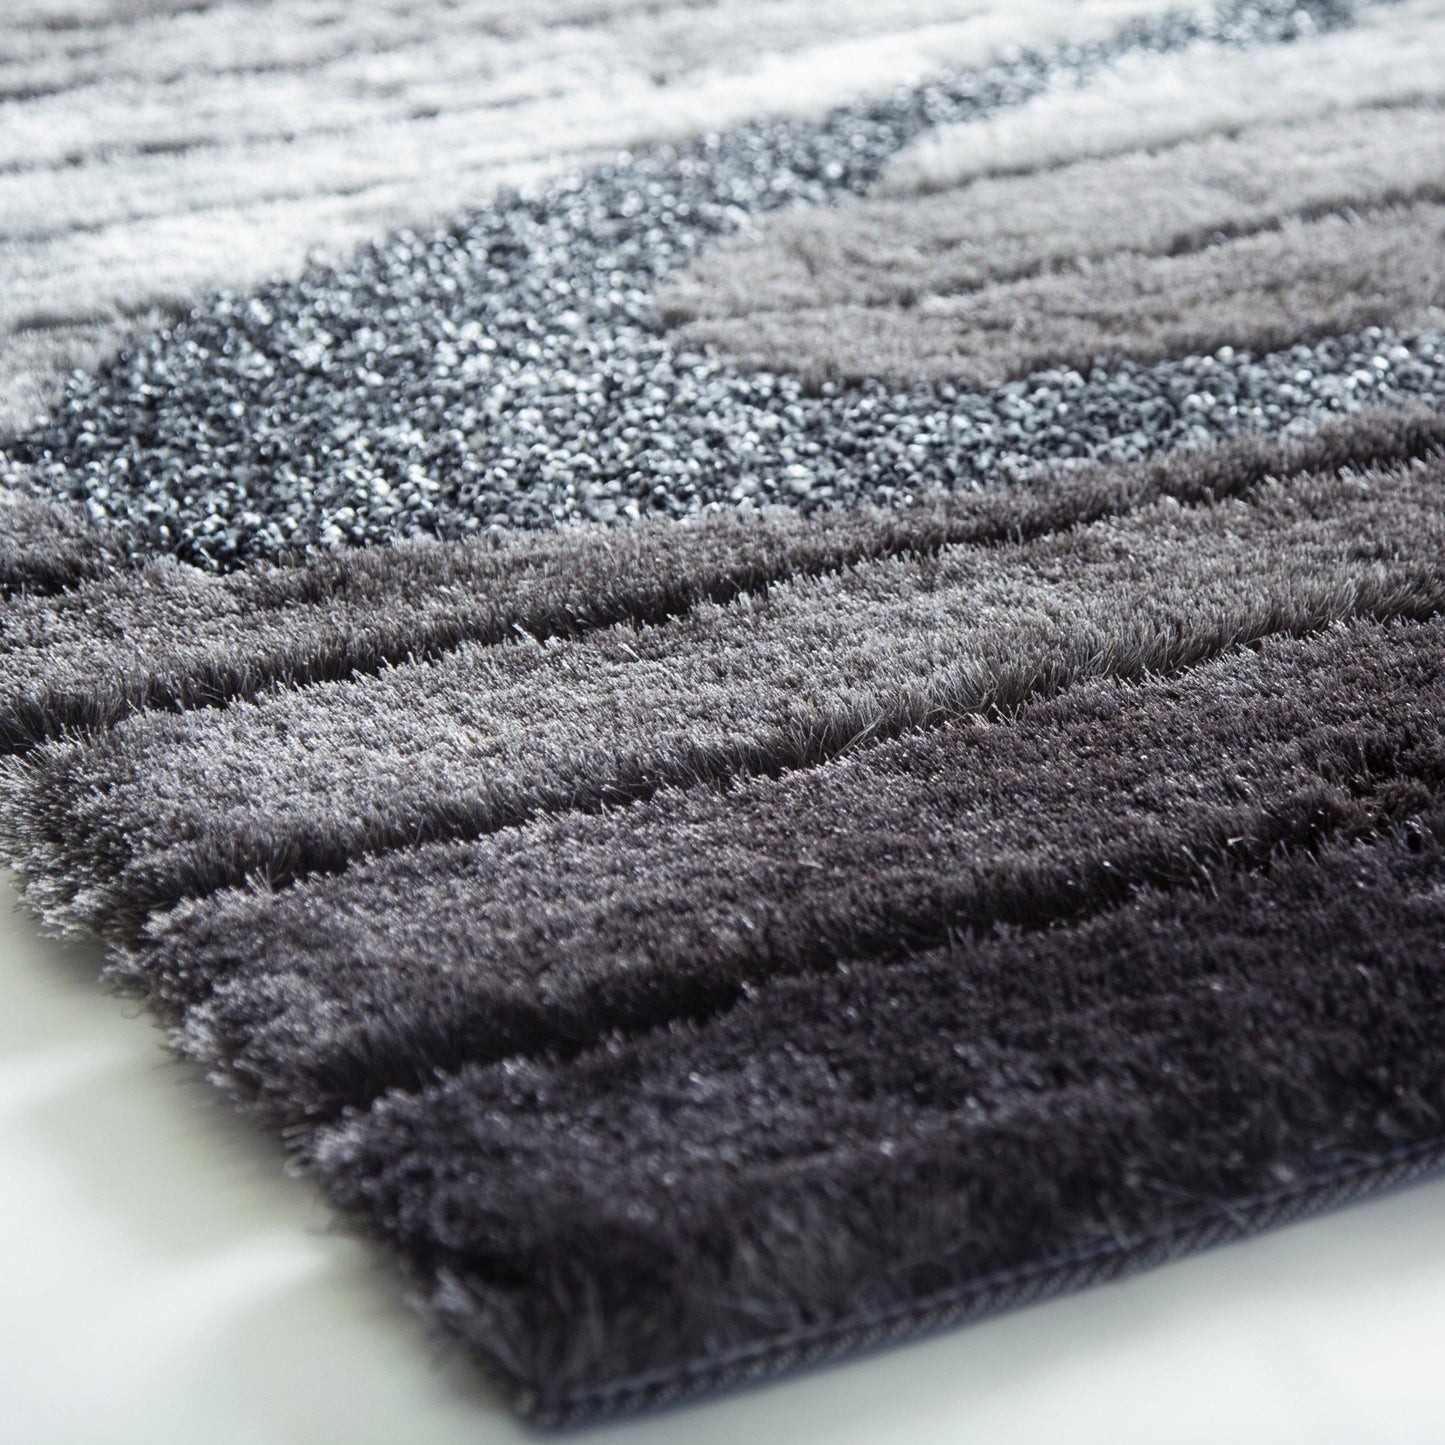 Soft Plush Fluffy Multi-textural Design Silver Gray Black Shag Area Rug/Carpet